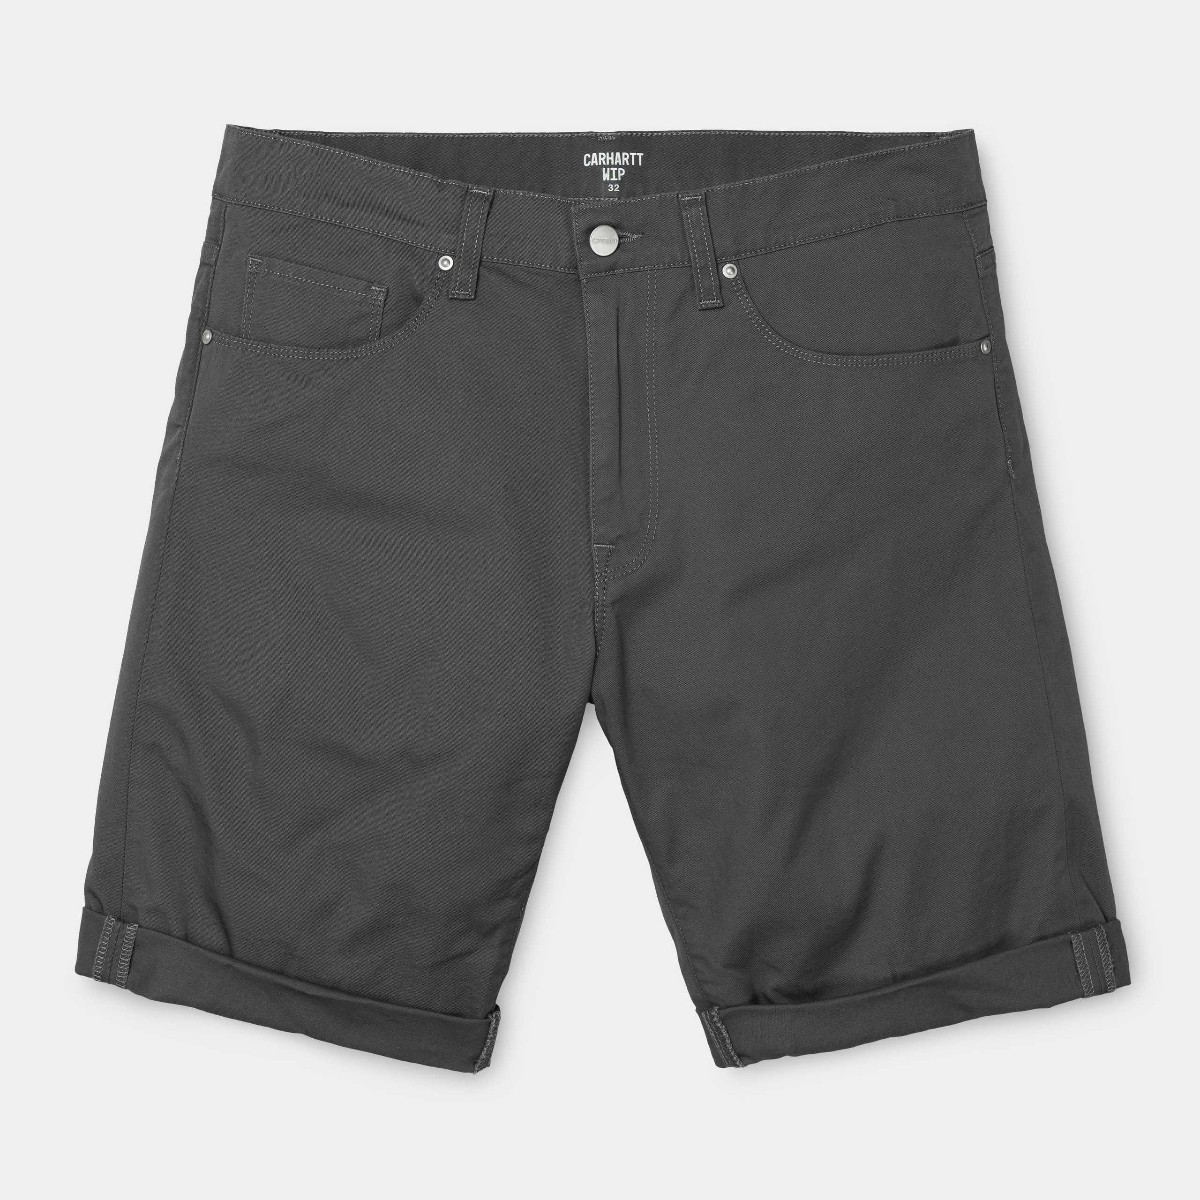 Carhartt Wip Swell Shorts Black 97/3% Cotton/Lycra® 'Wichita' Stretch ...